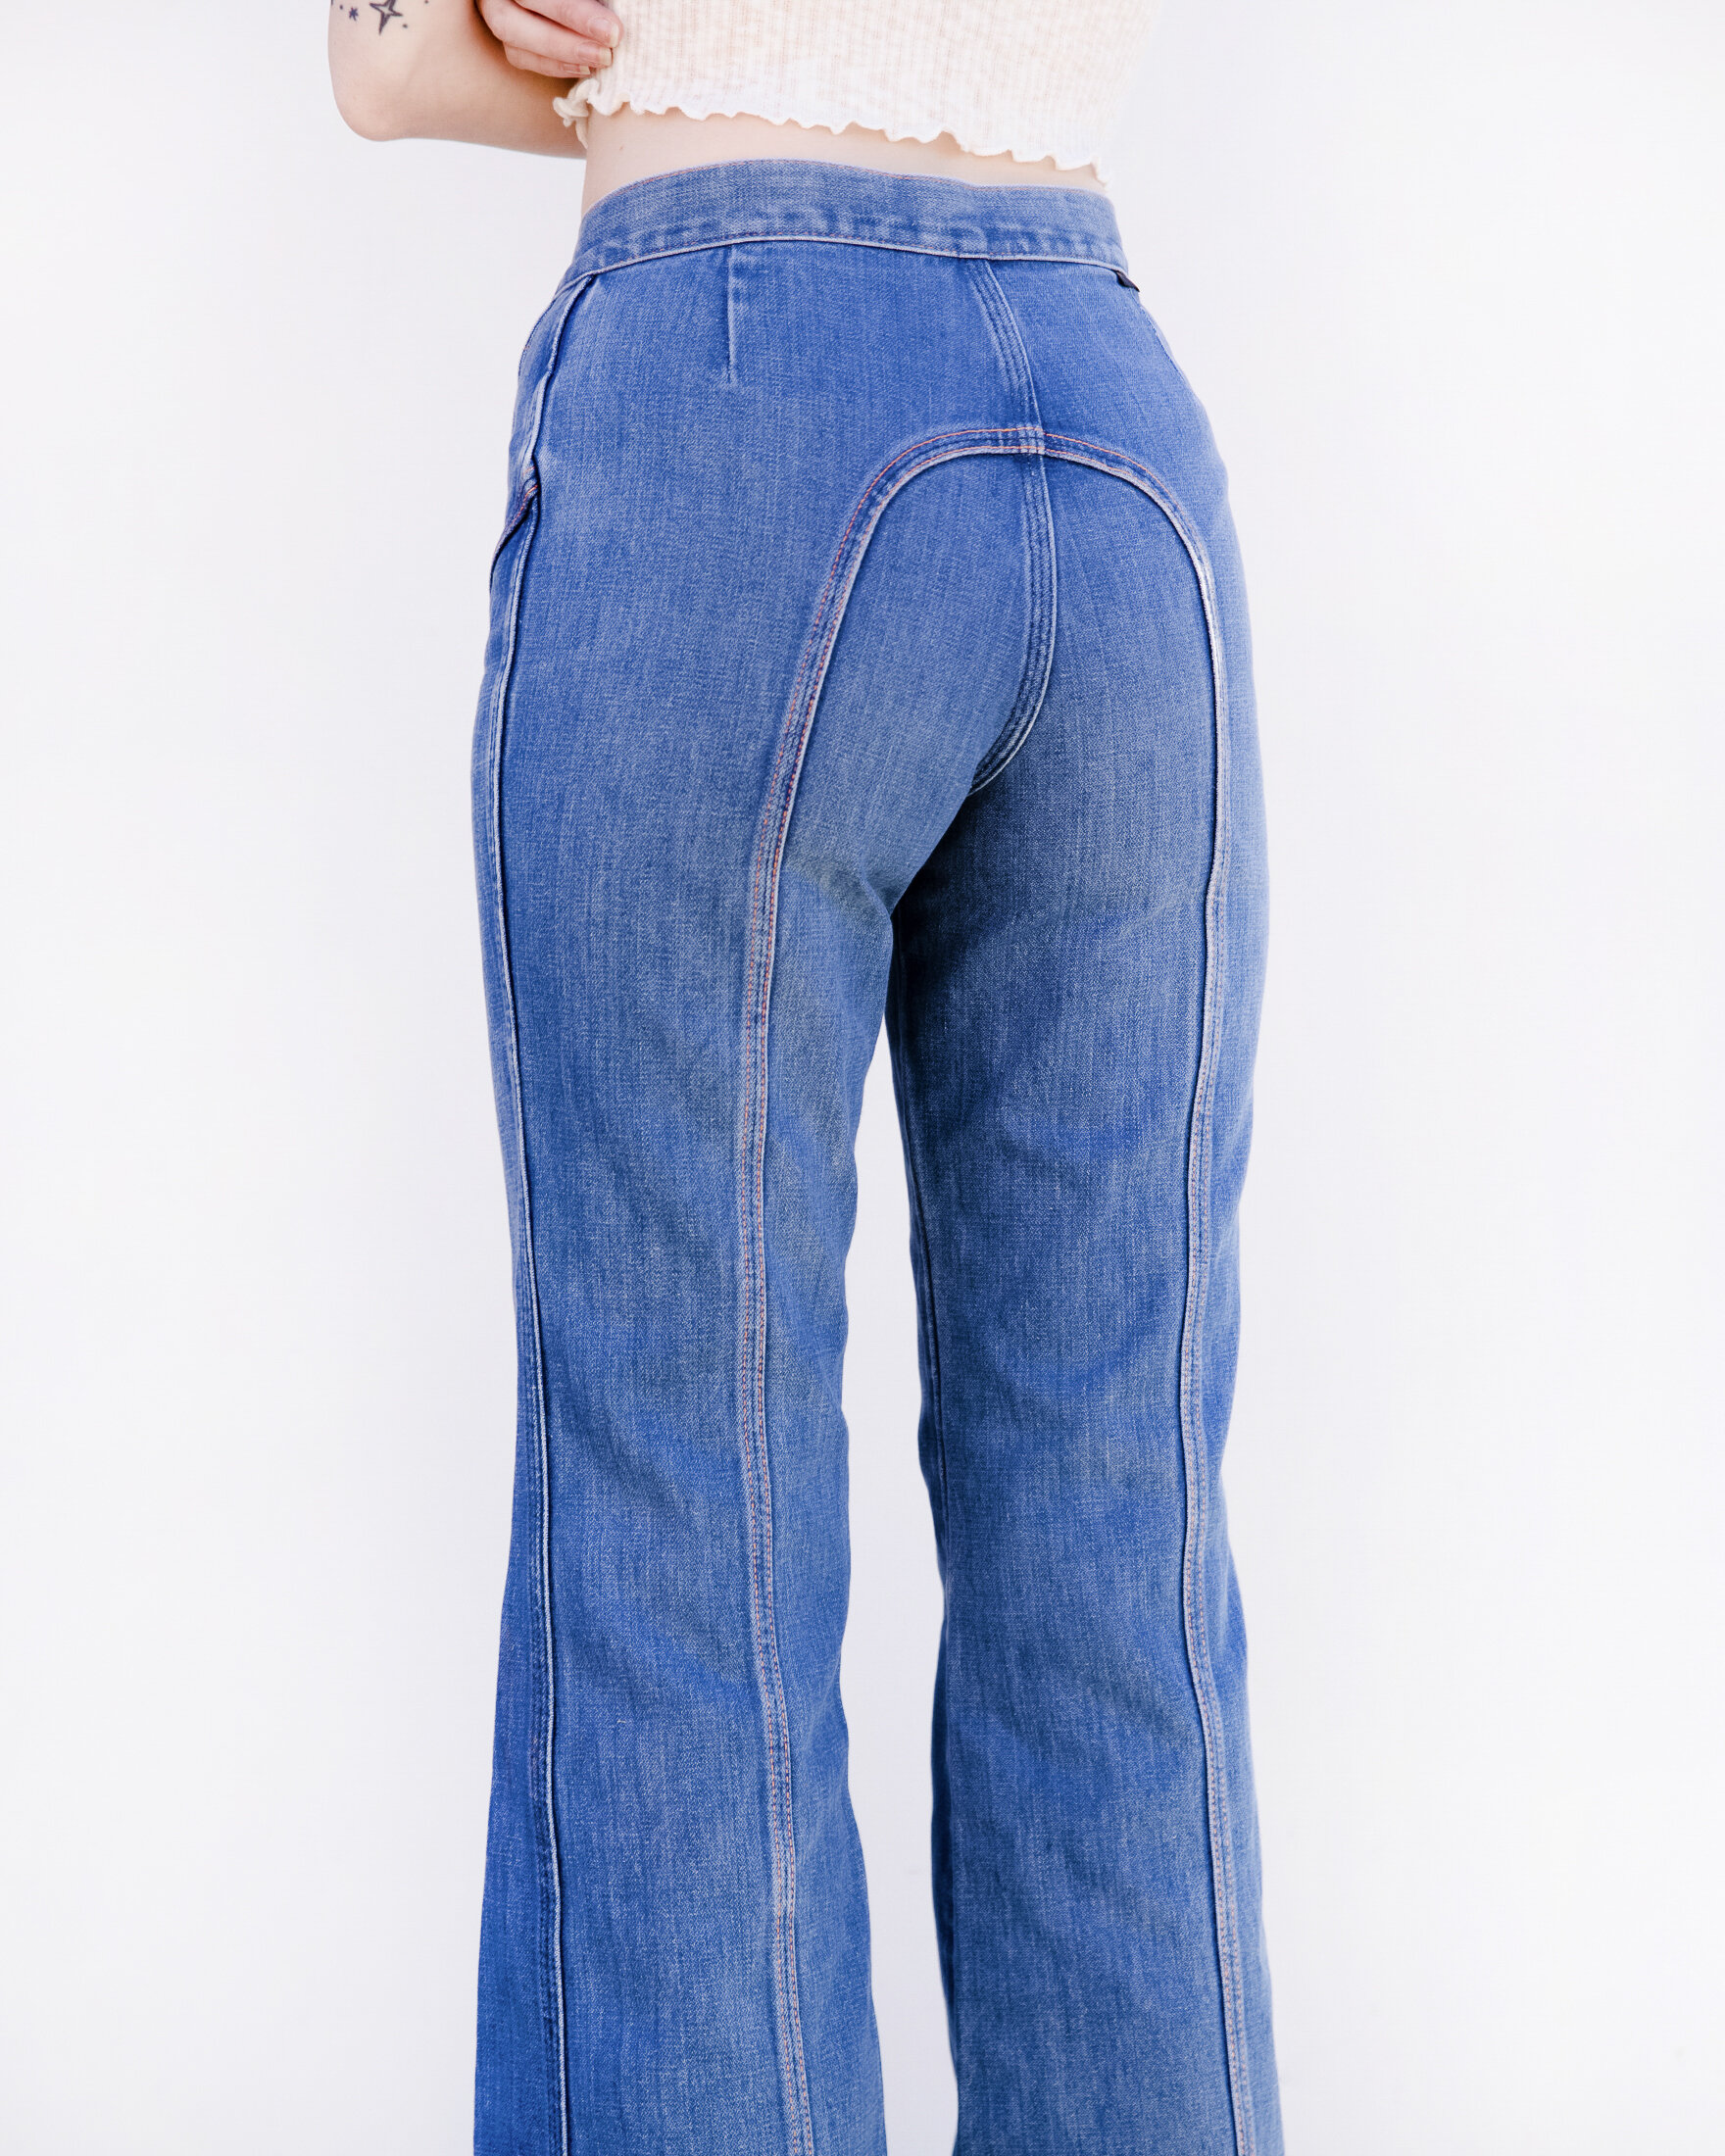 saddleback jeans 1970s